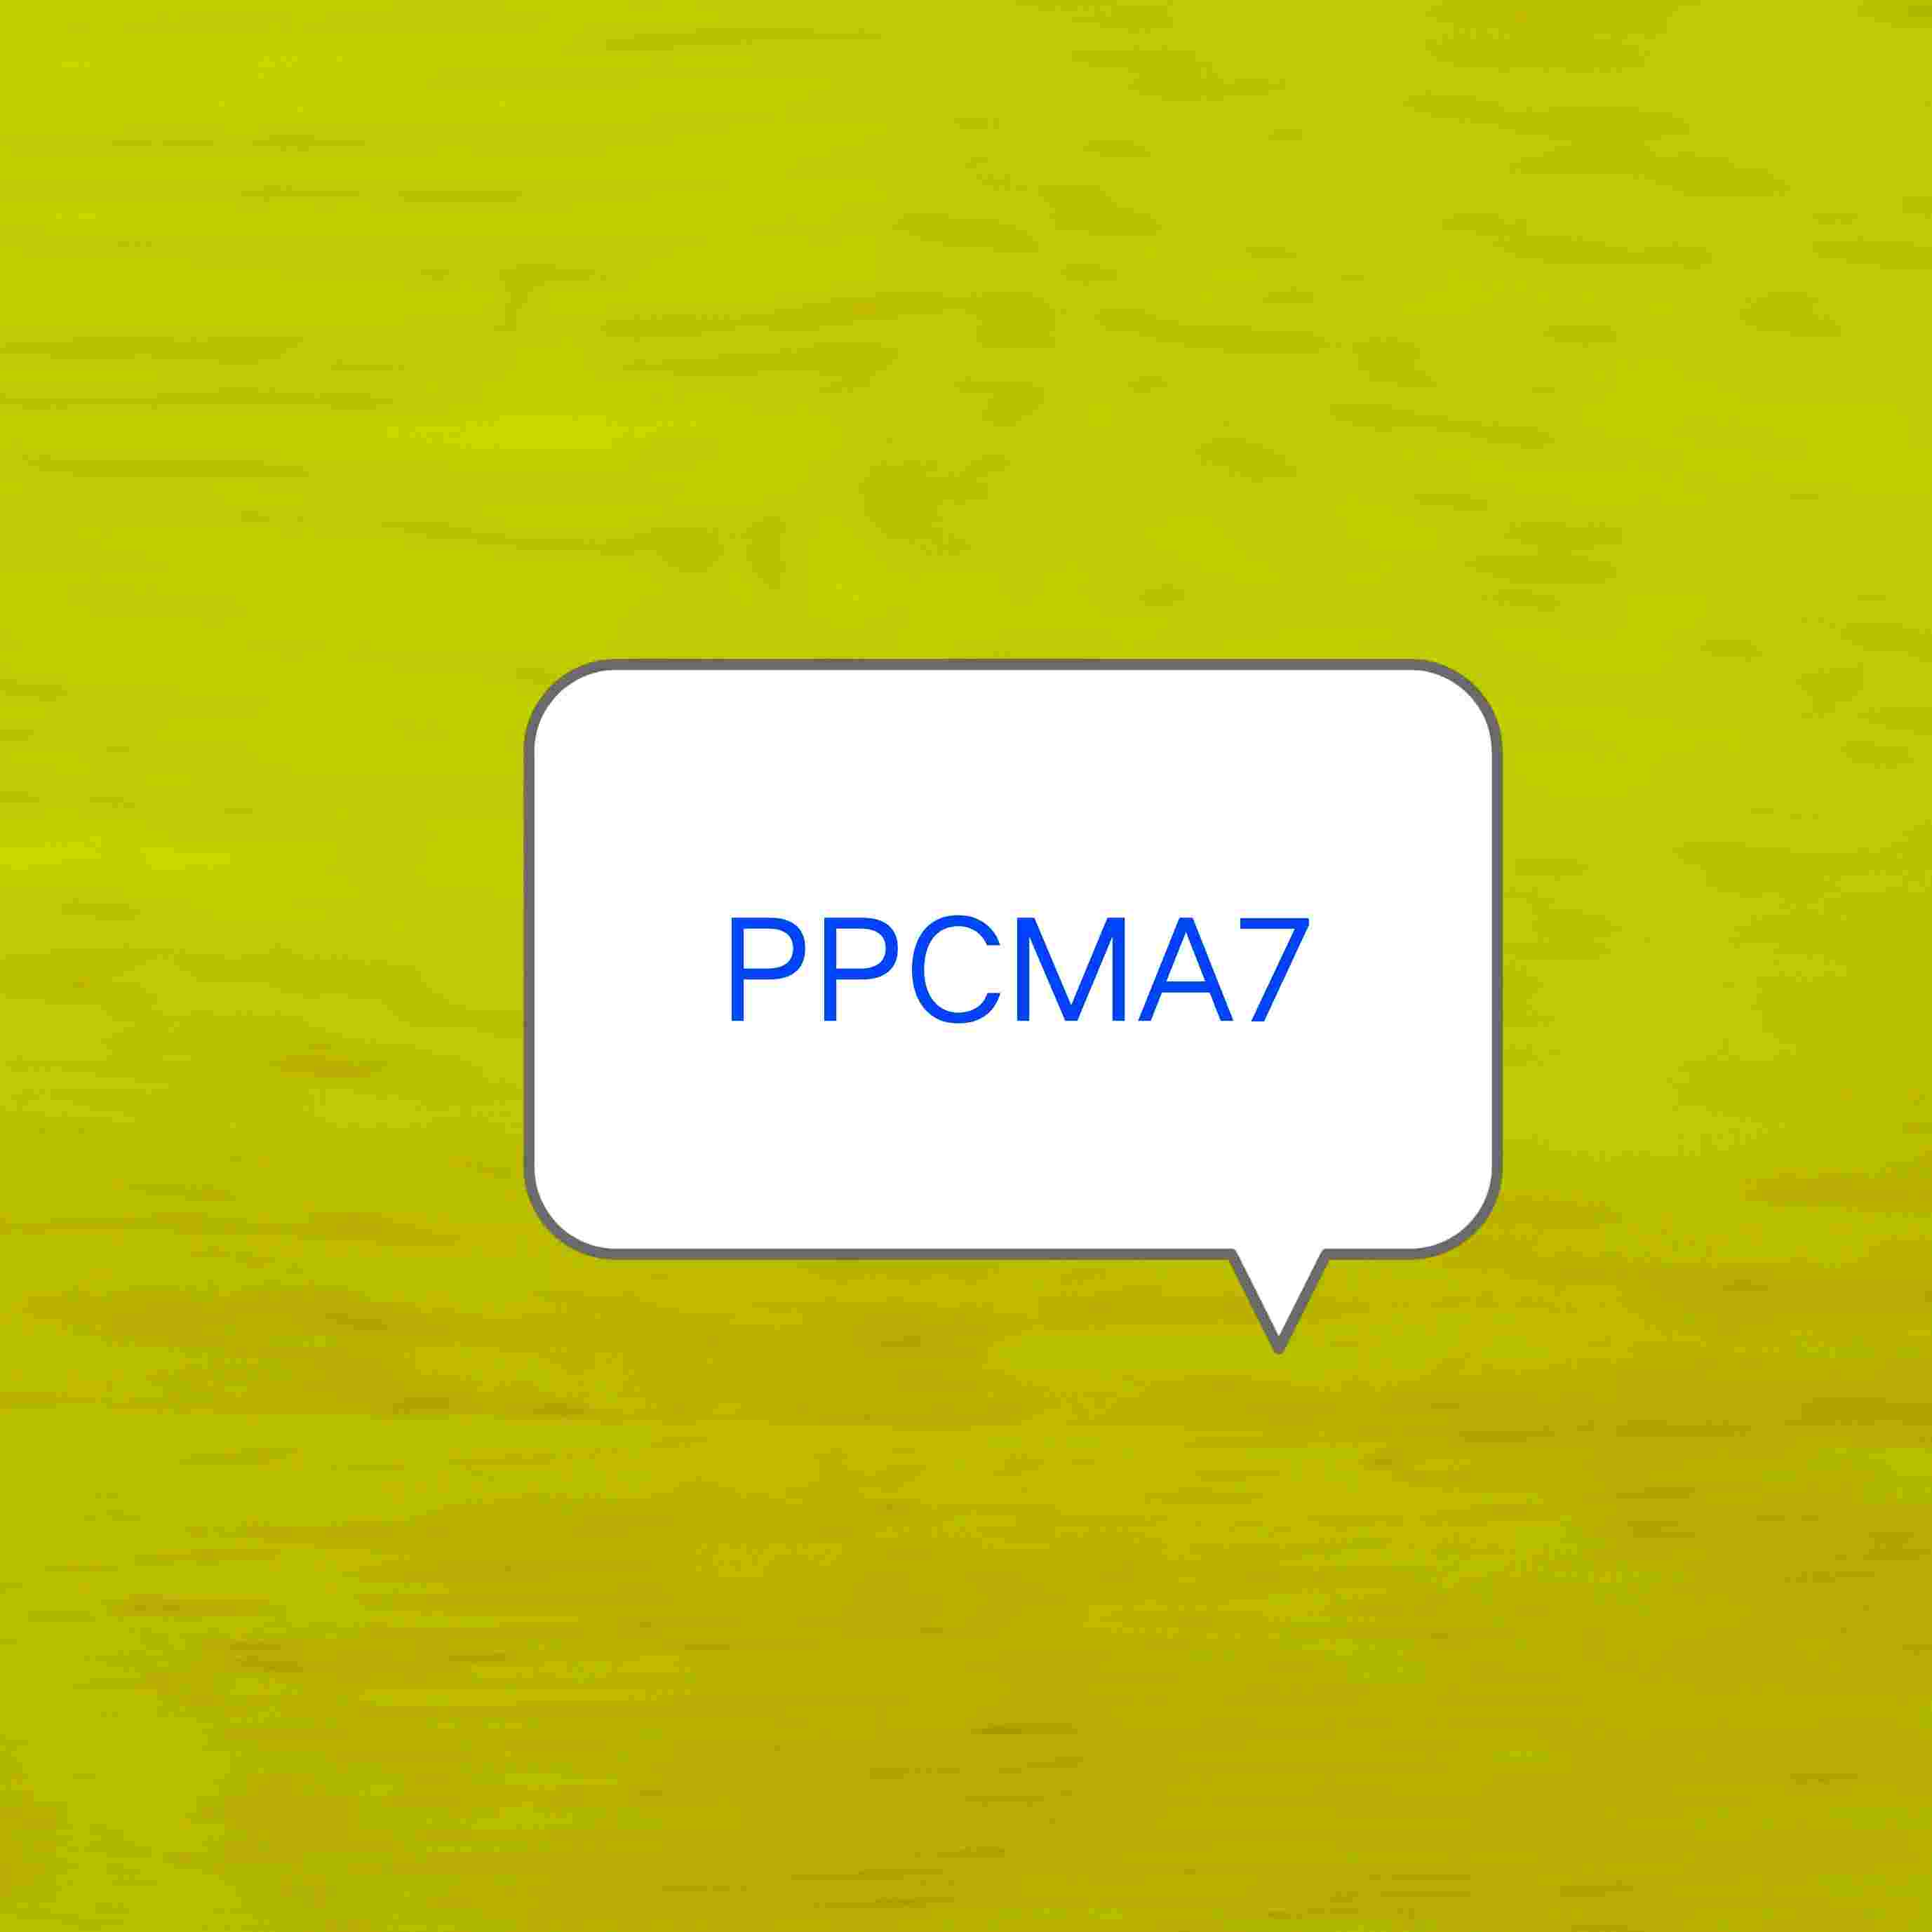 ppcma7